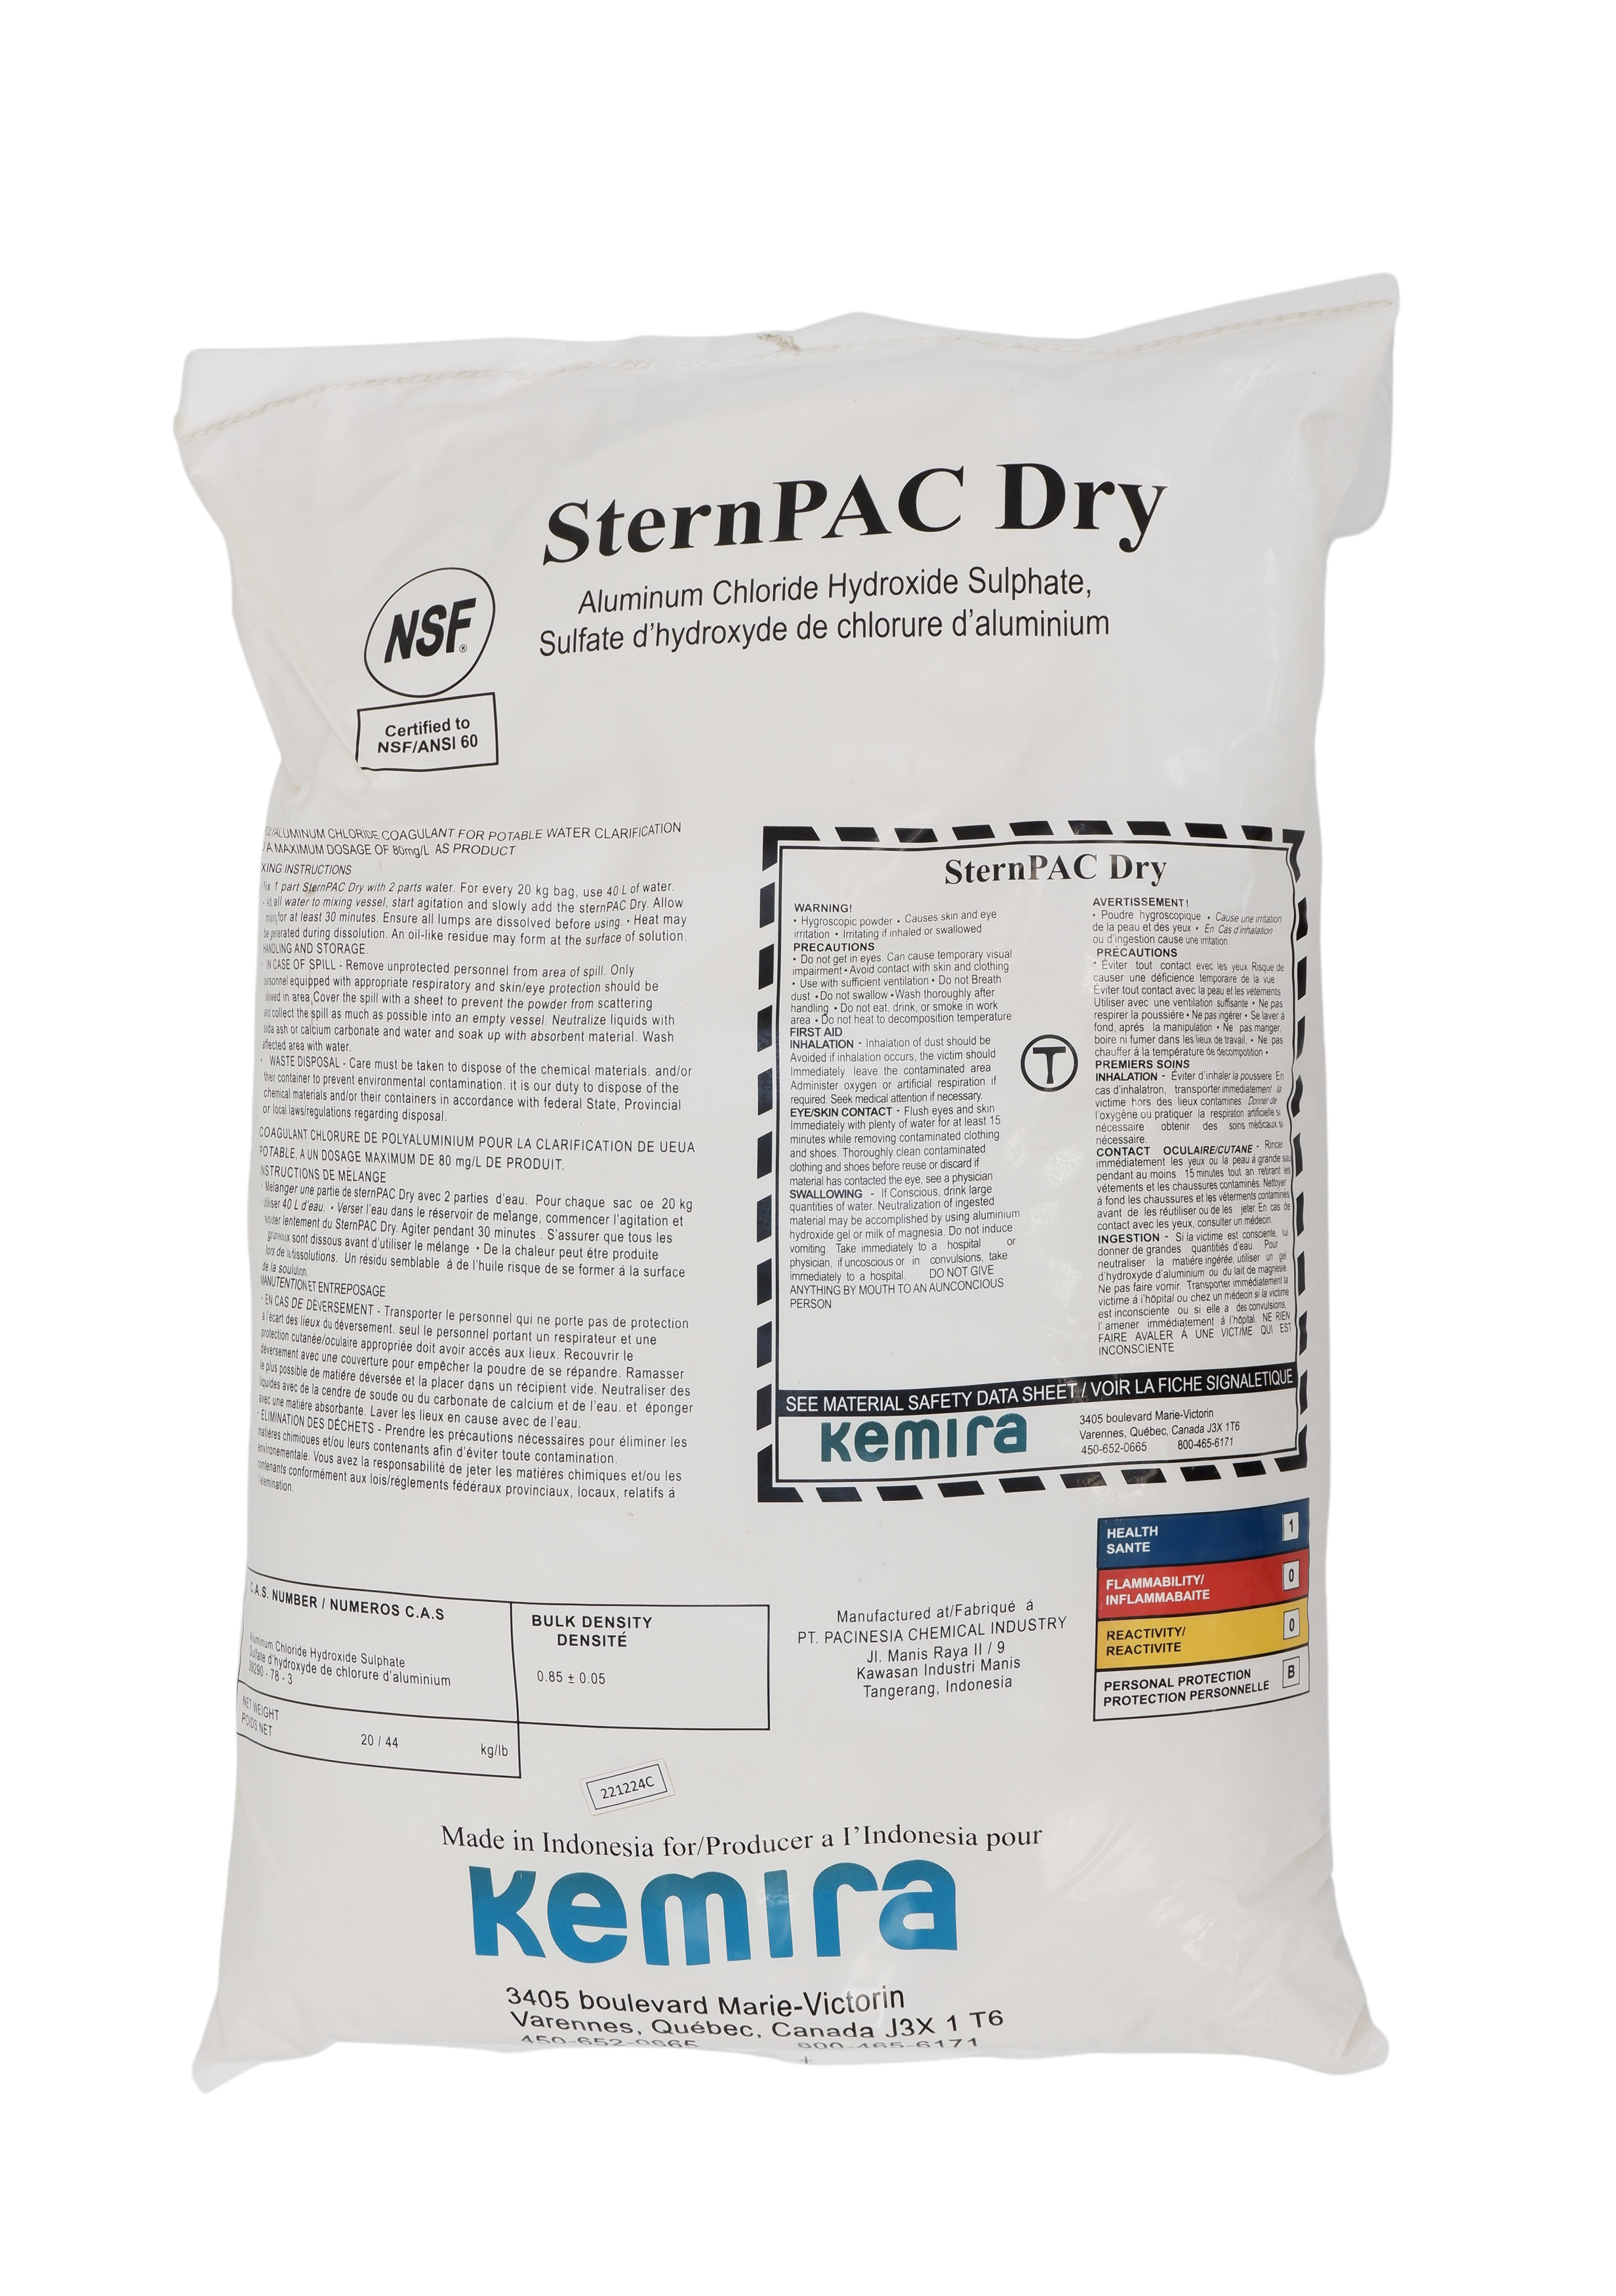 SternPAC Dry Poly/Aluminum Chloride Coagulant for Potable Water Clarification - 20 kg Bag